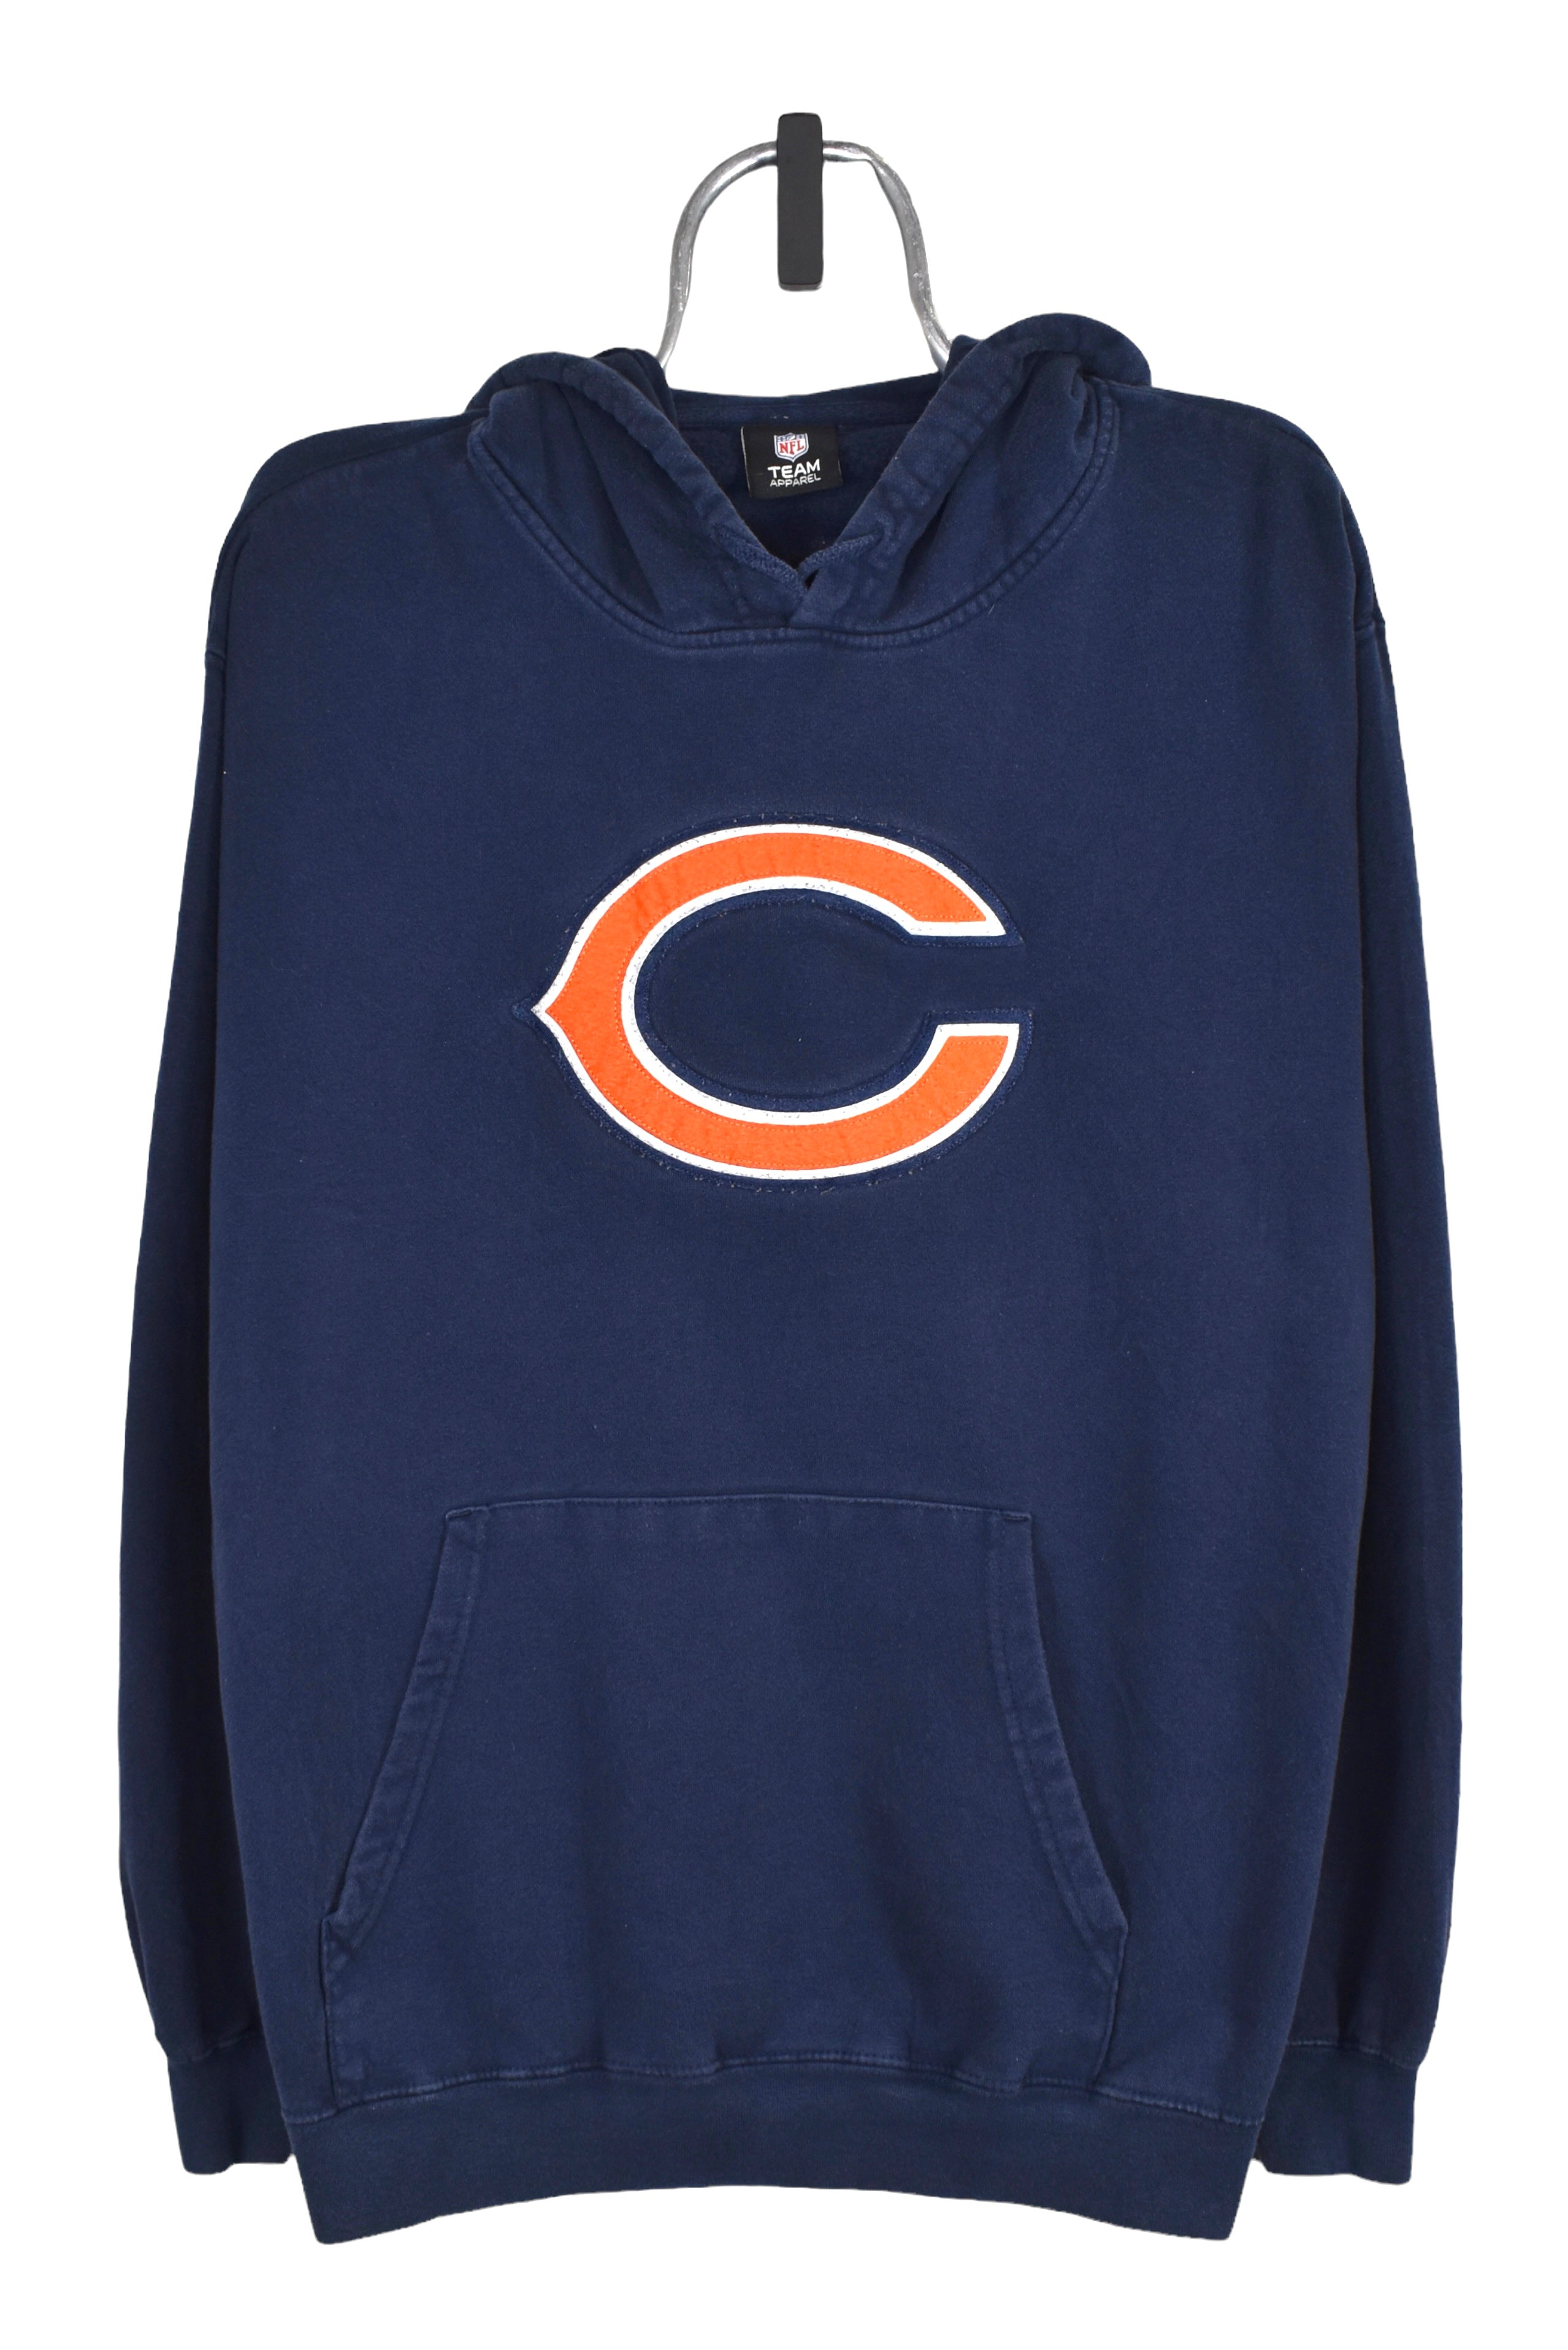 Vintage Chicago Cubs hoodie (XL), navy NFL patch sweatshirt